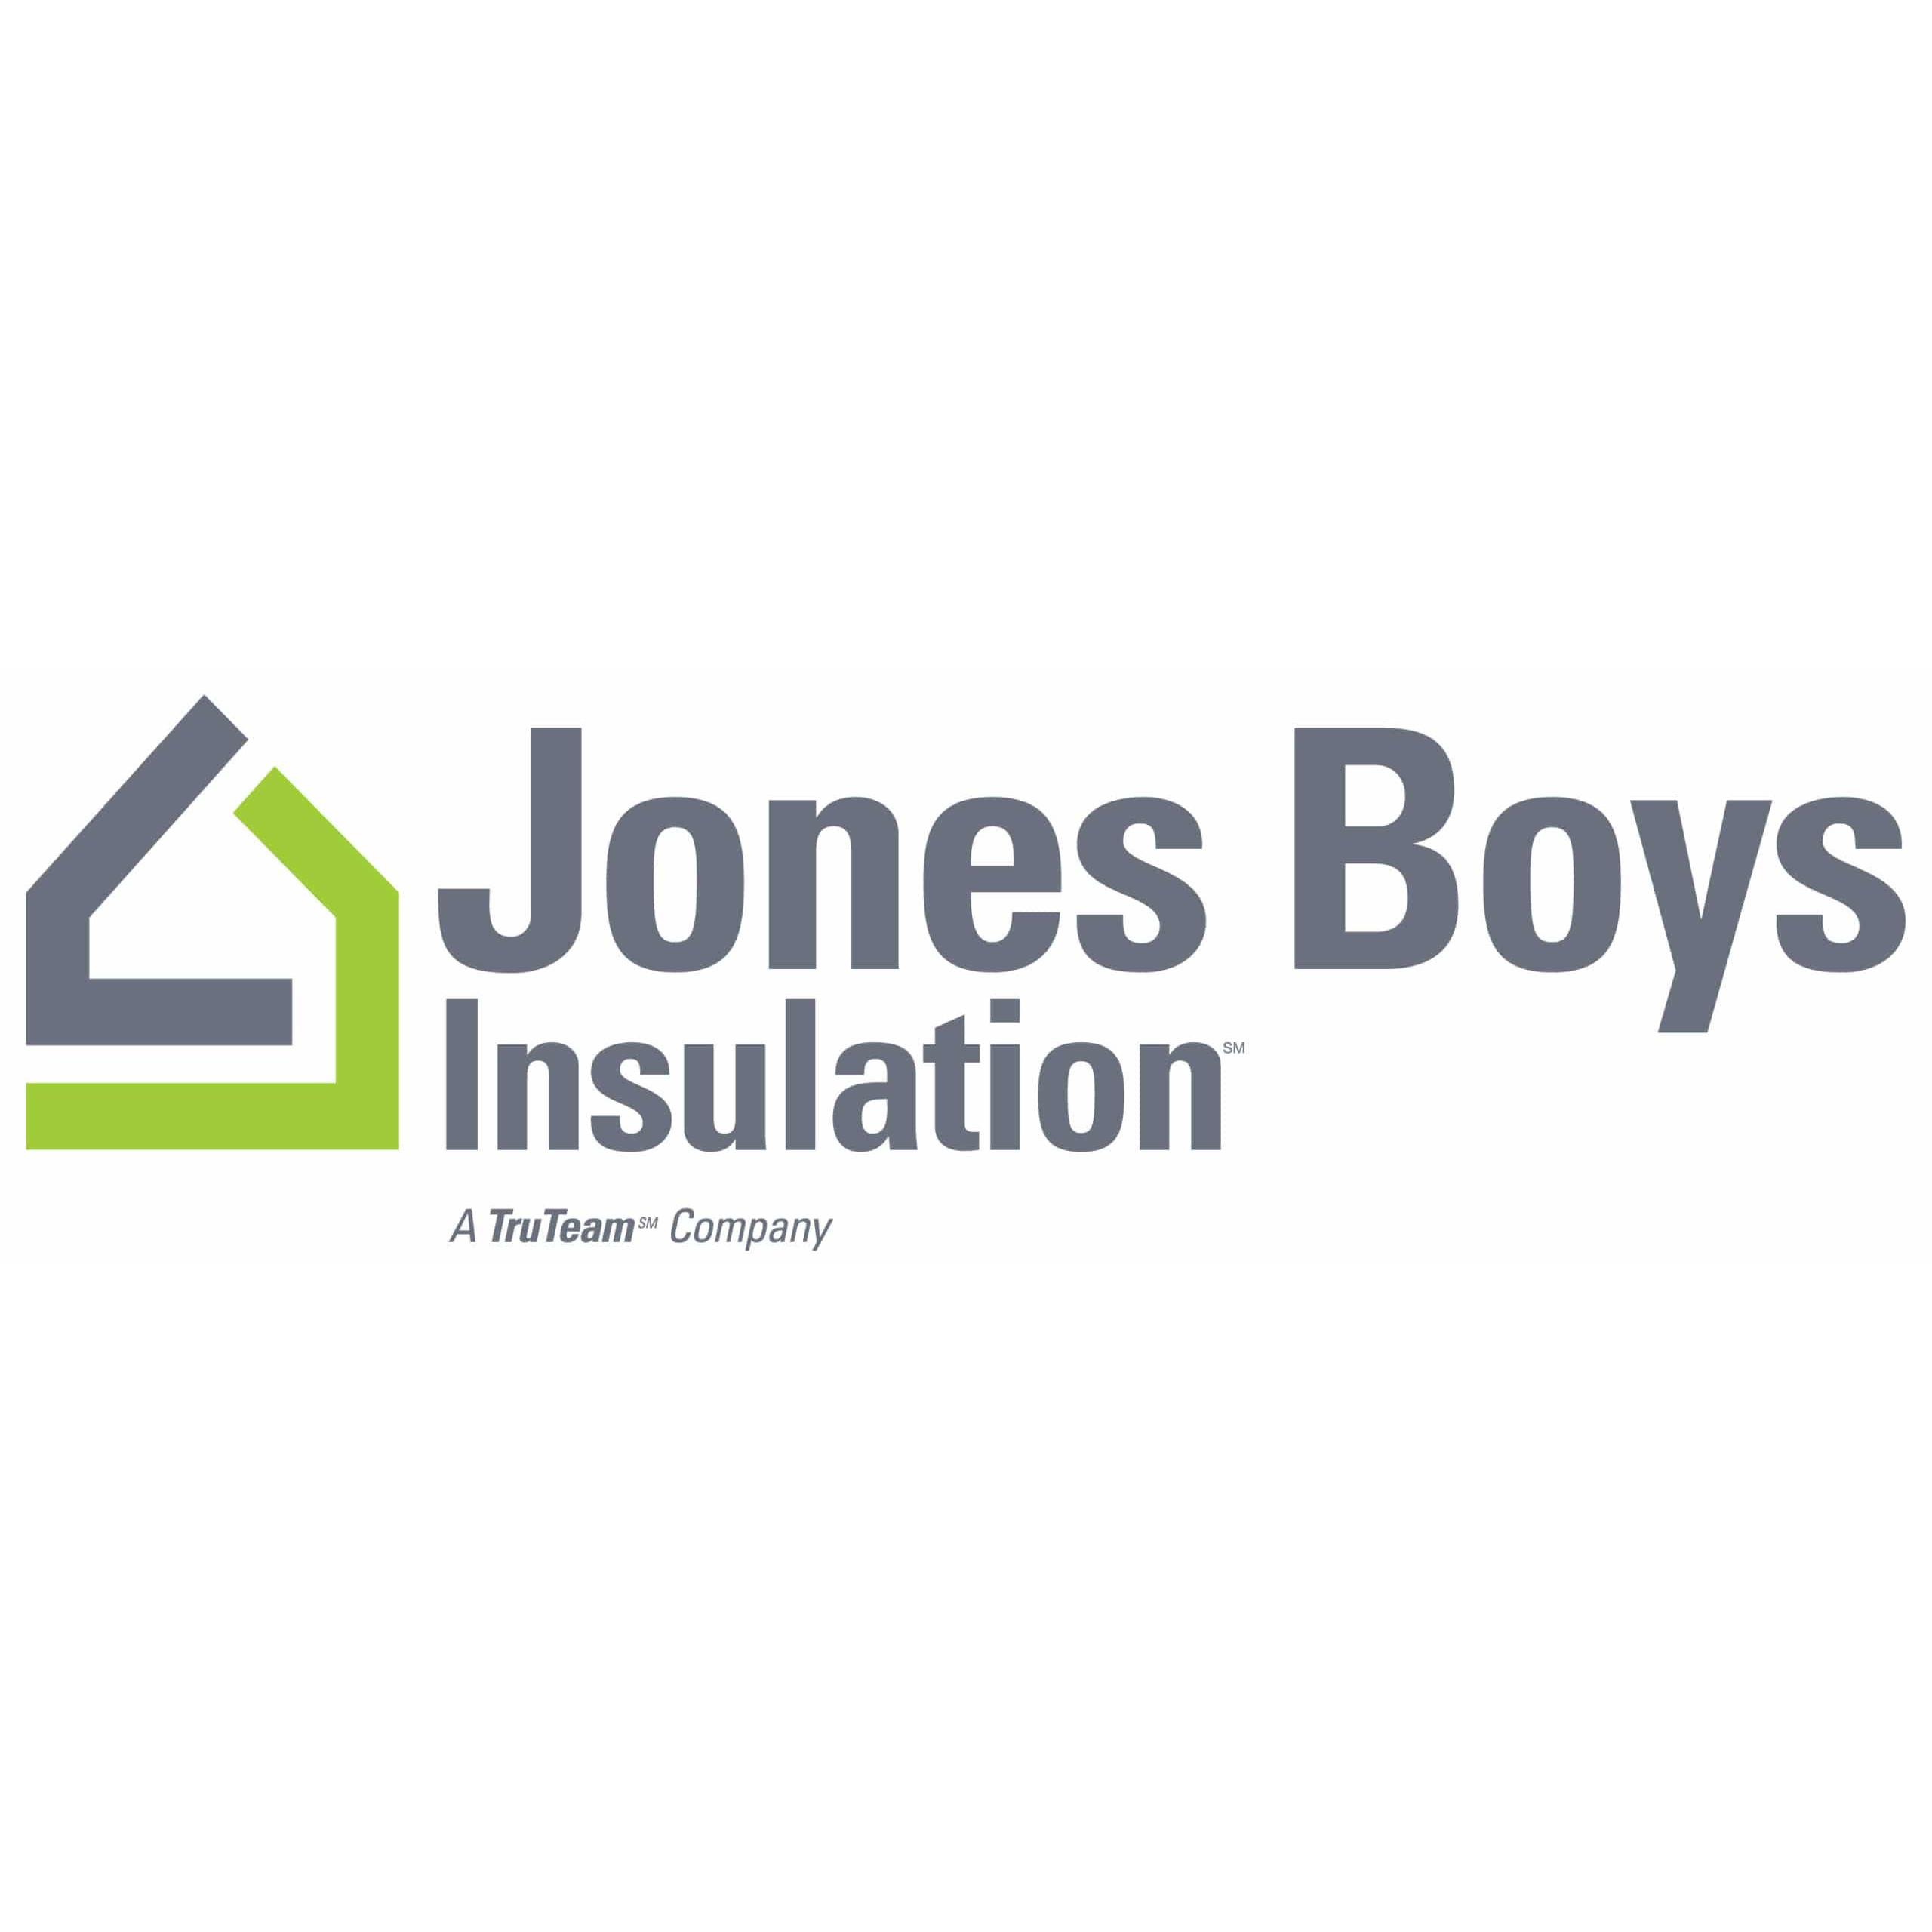 Jones Boys Insulation